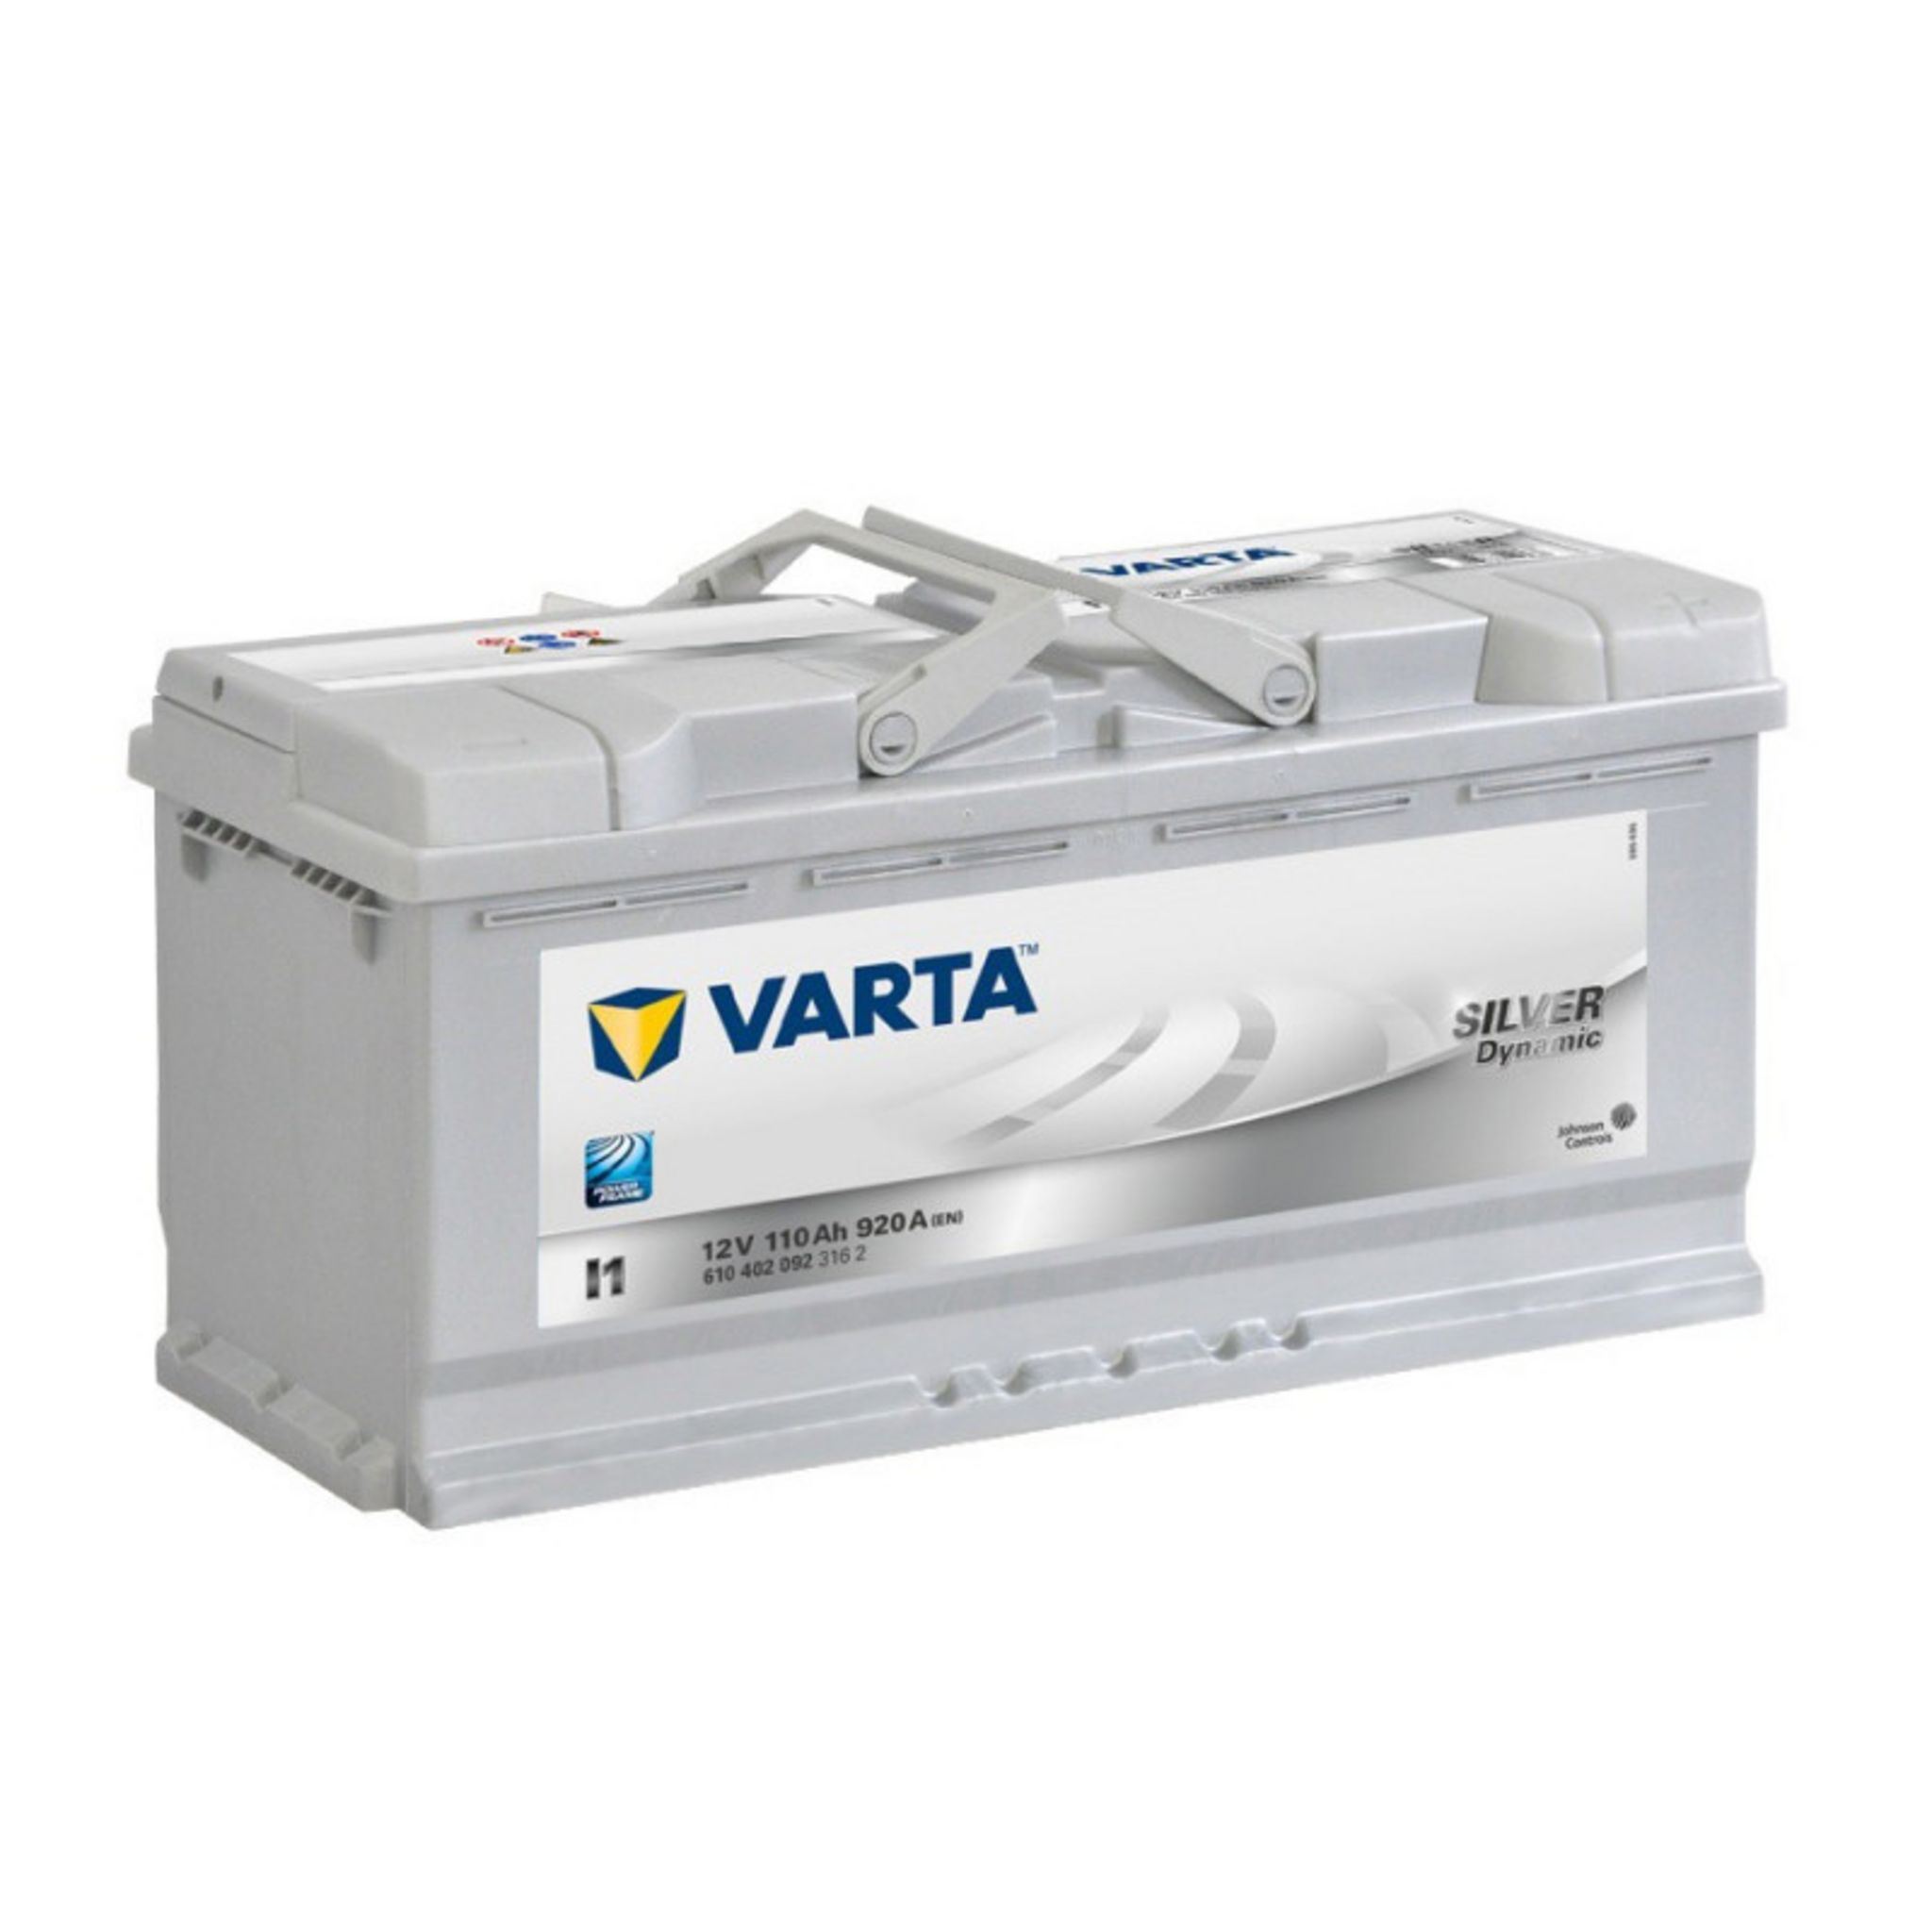 Varta Batterie Varta Silver Dynamic I1 12v 110ah 920A 610 402 092 pas cher  